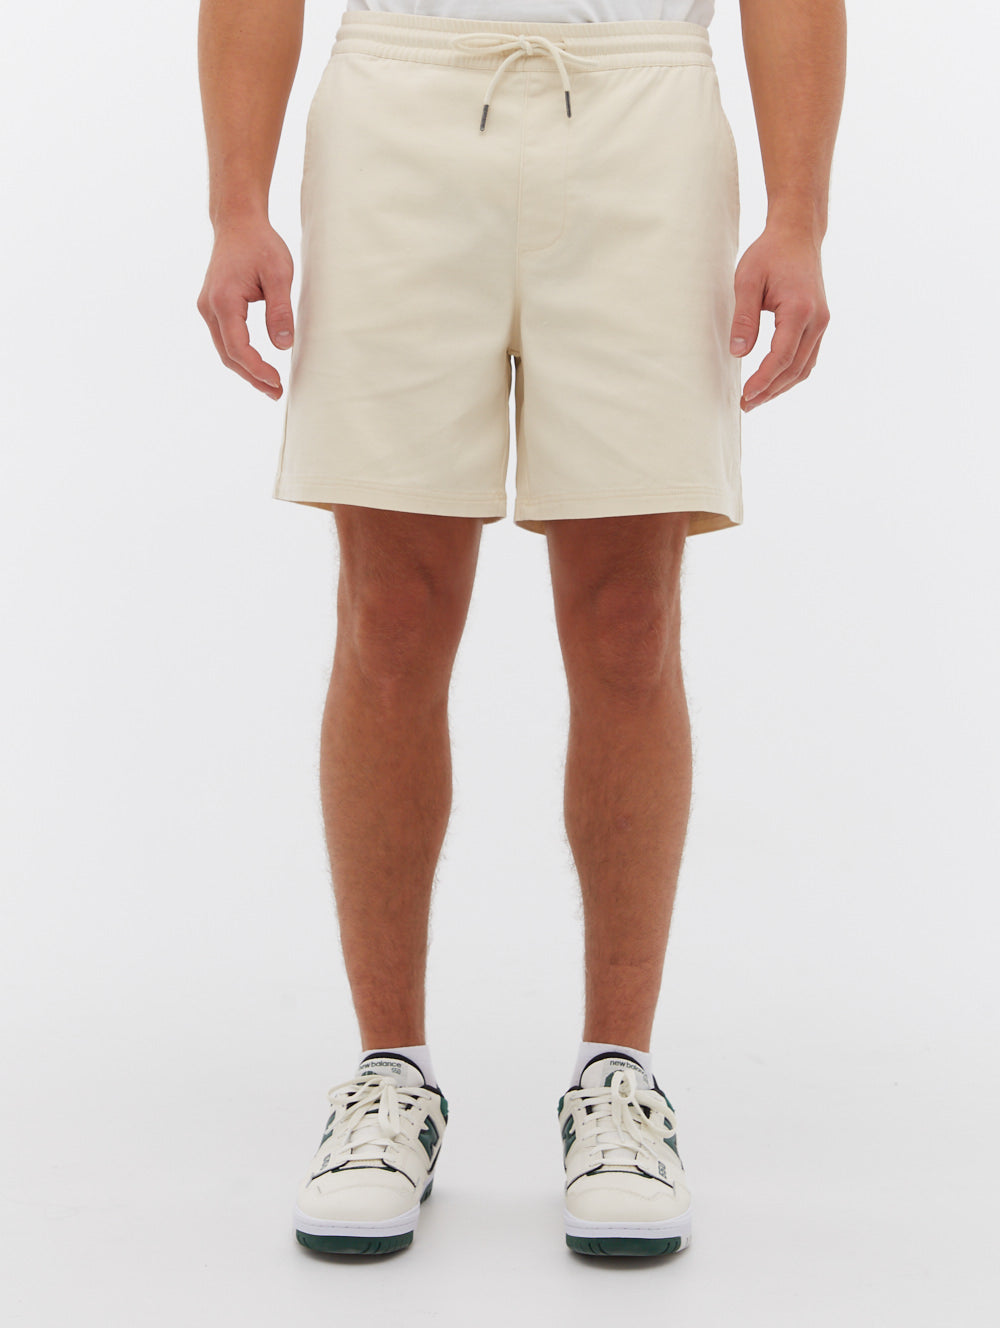 Winser Woven 7” Shorts - BMLH41054